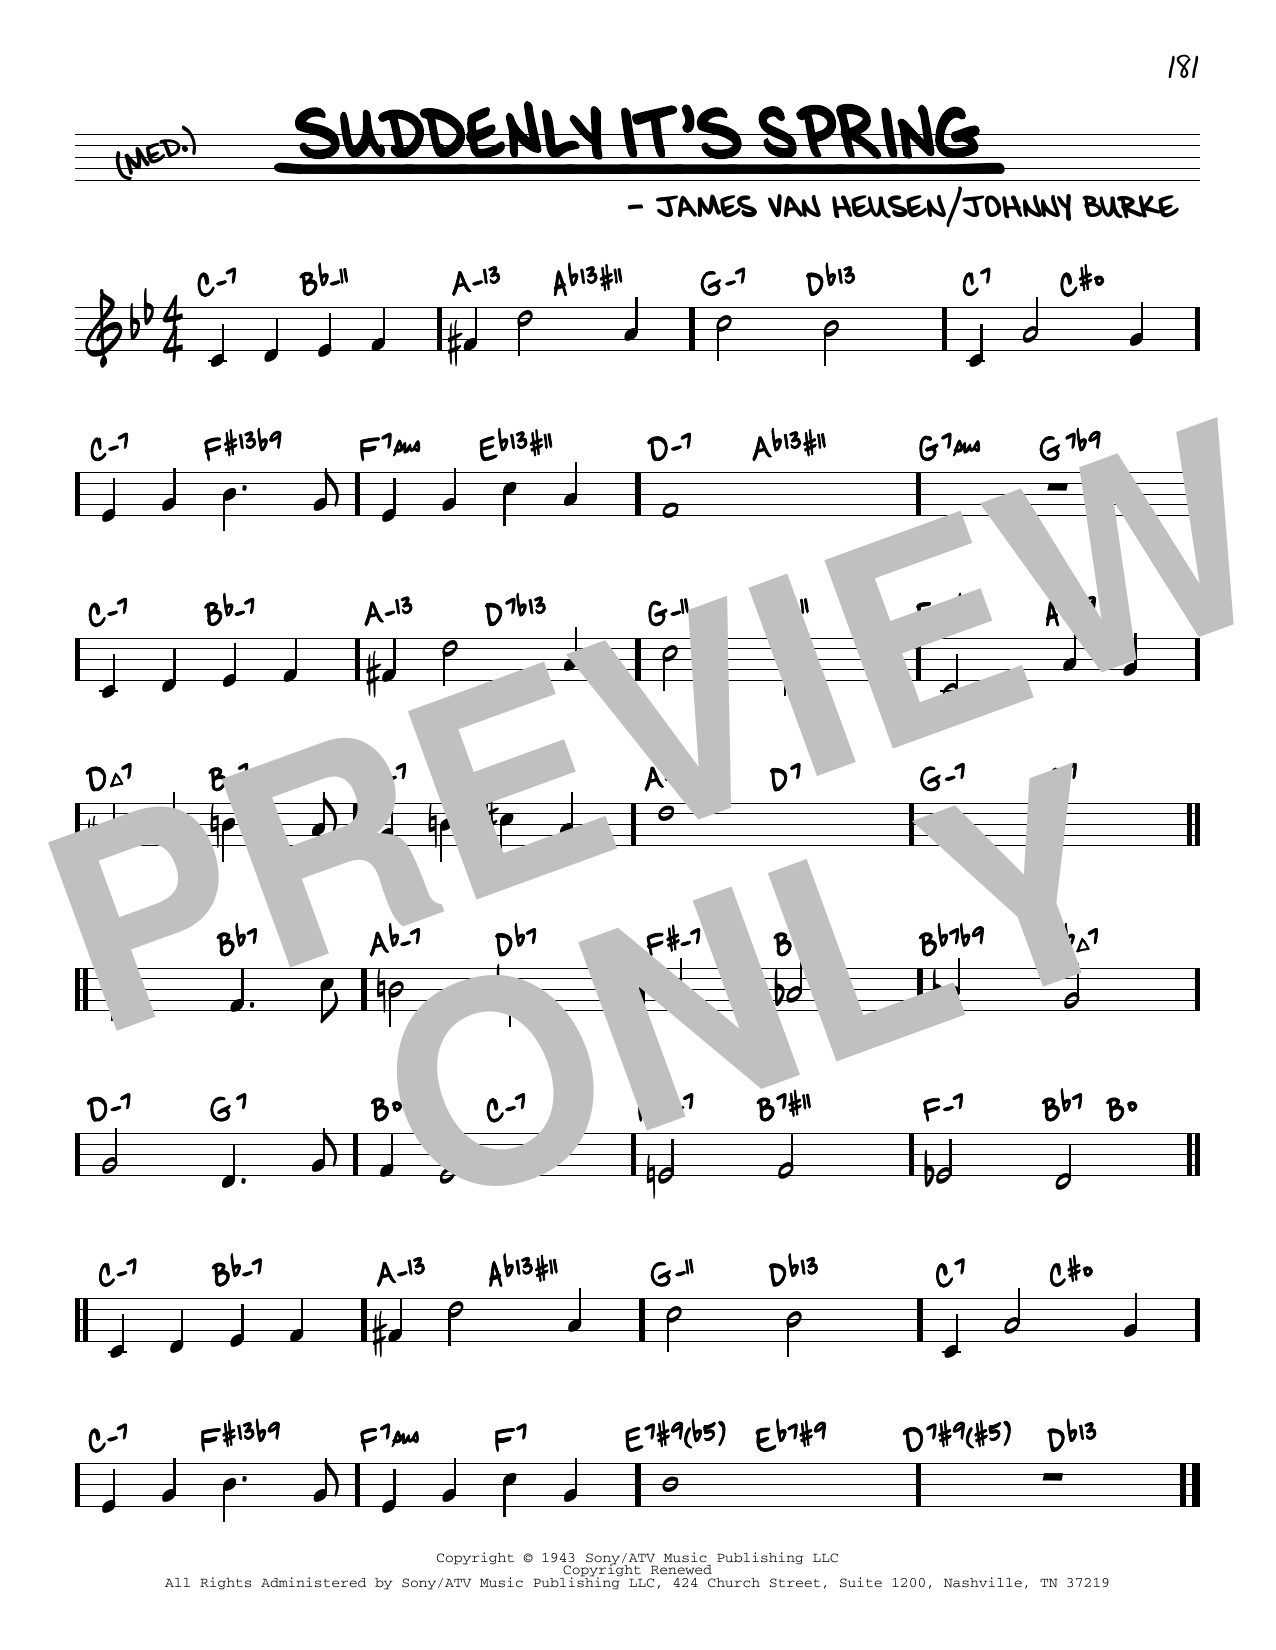 James Van Heusen Suddenly It's Spring (arr. David Hazeltine) sheet music notes and chords arranged for Real Book – Enhanced Chords